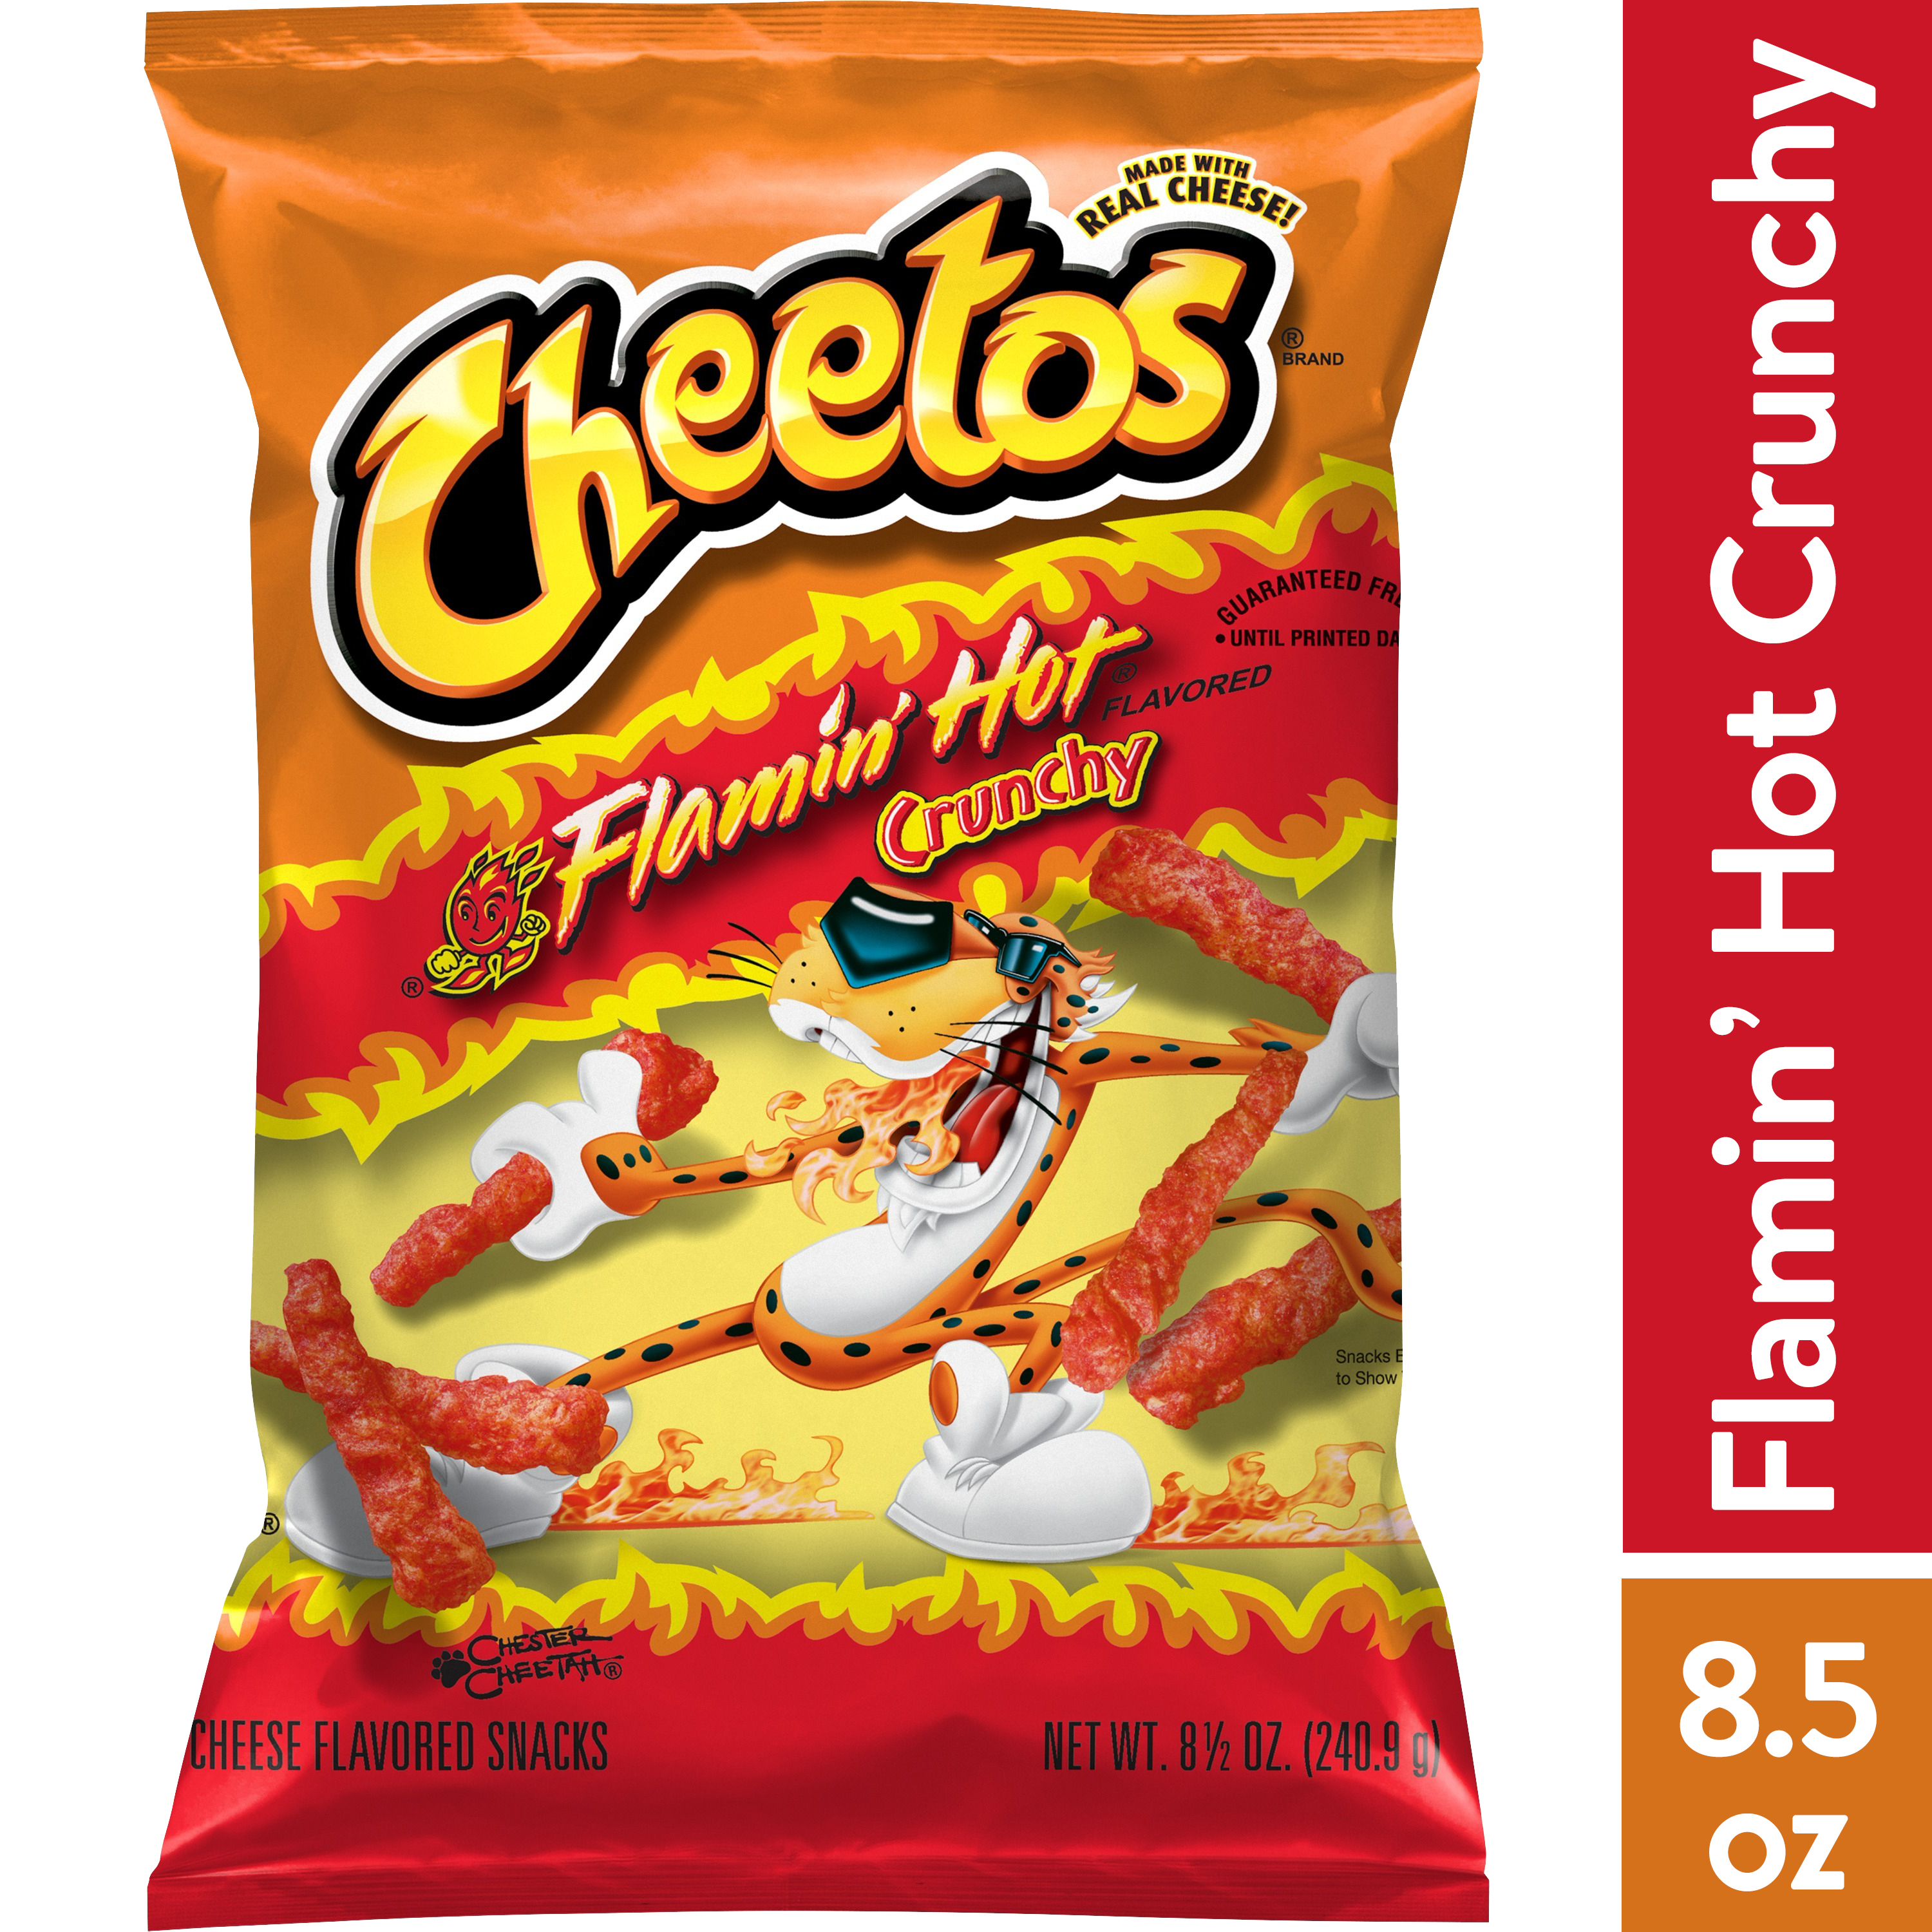 Cheetos Crunchy, Flamin' Hot, 8.5oz Bag, Snack Chips - image 1 of 9